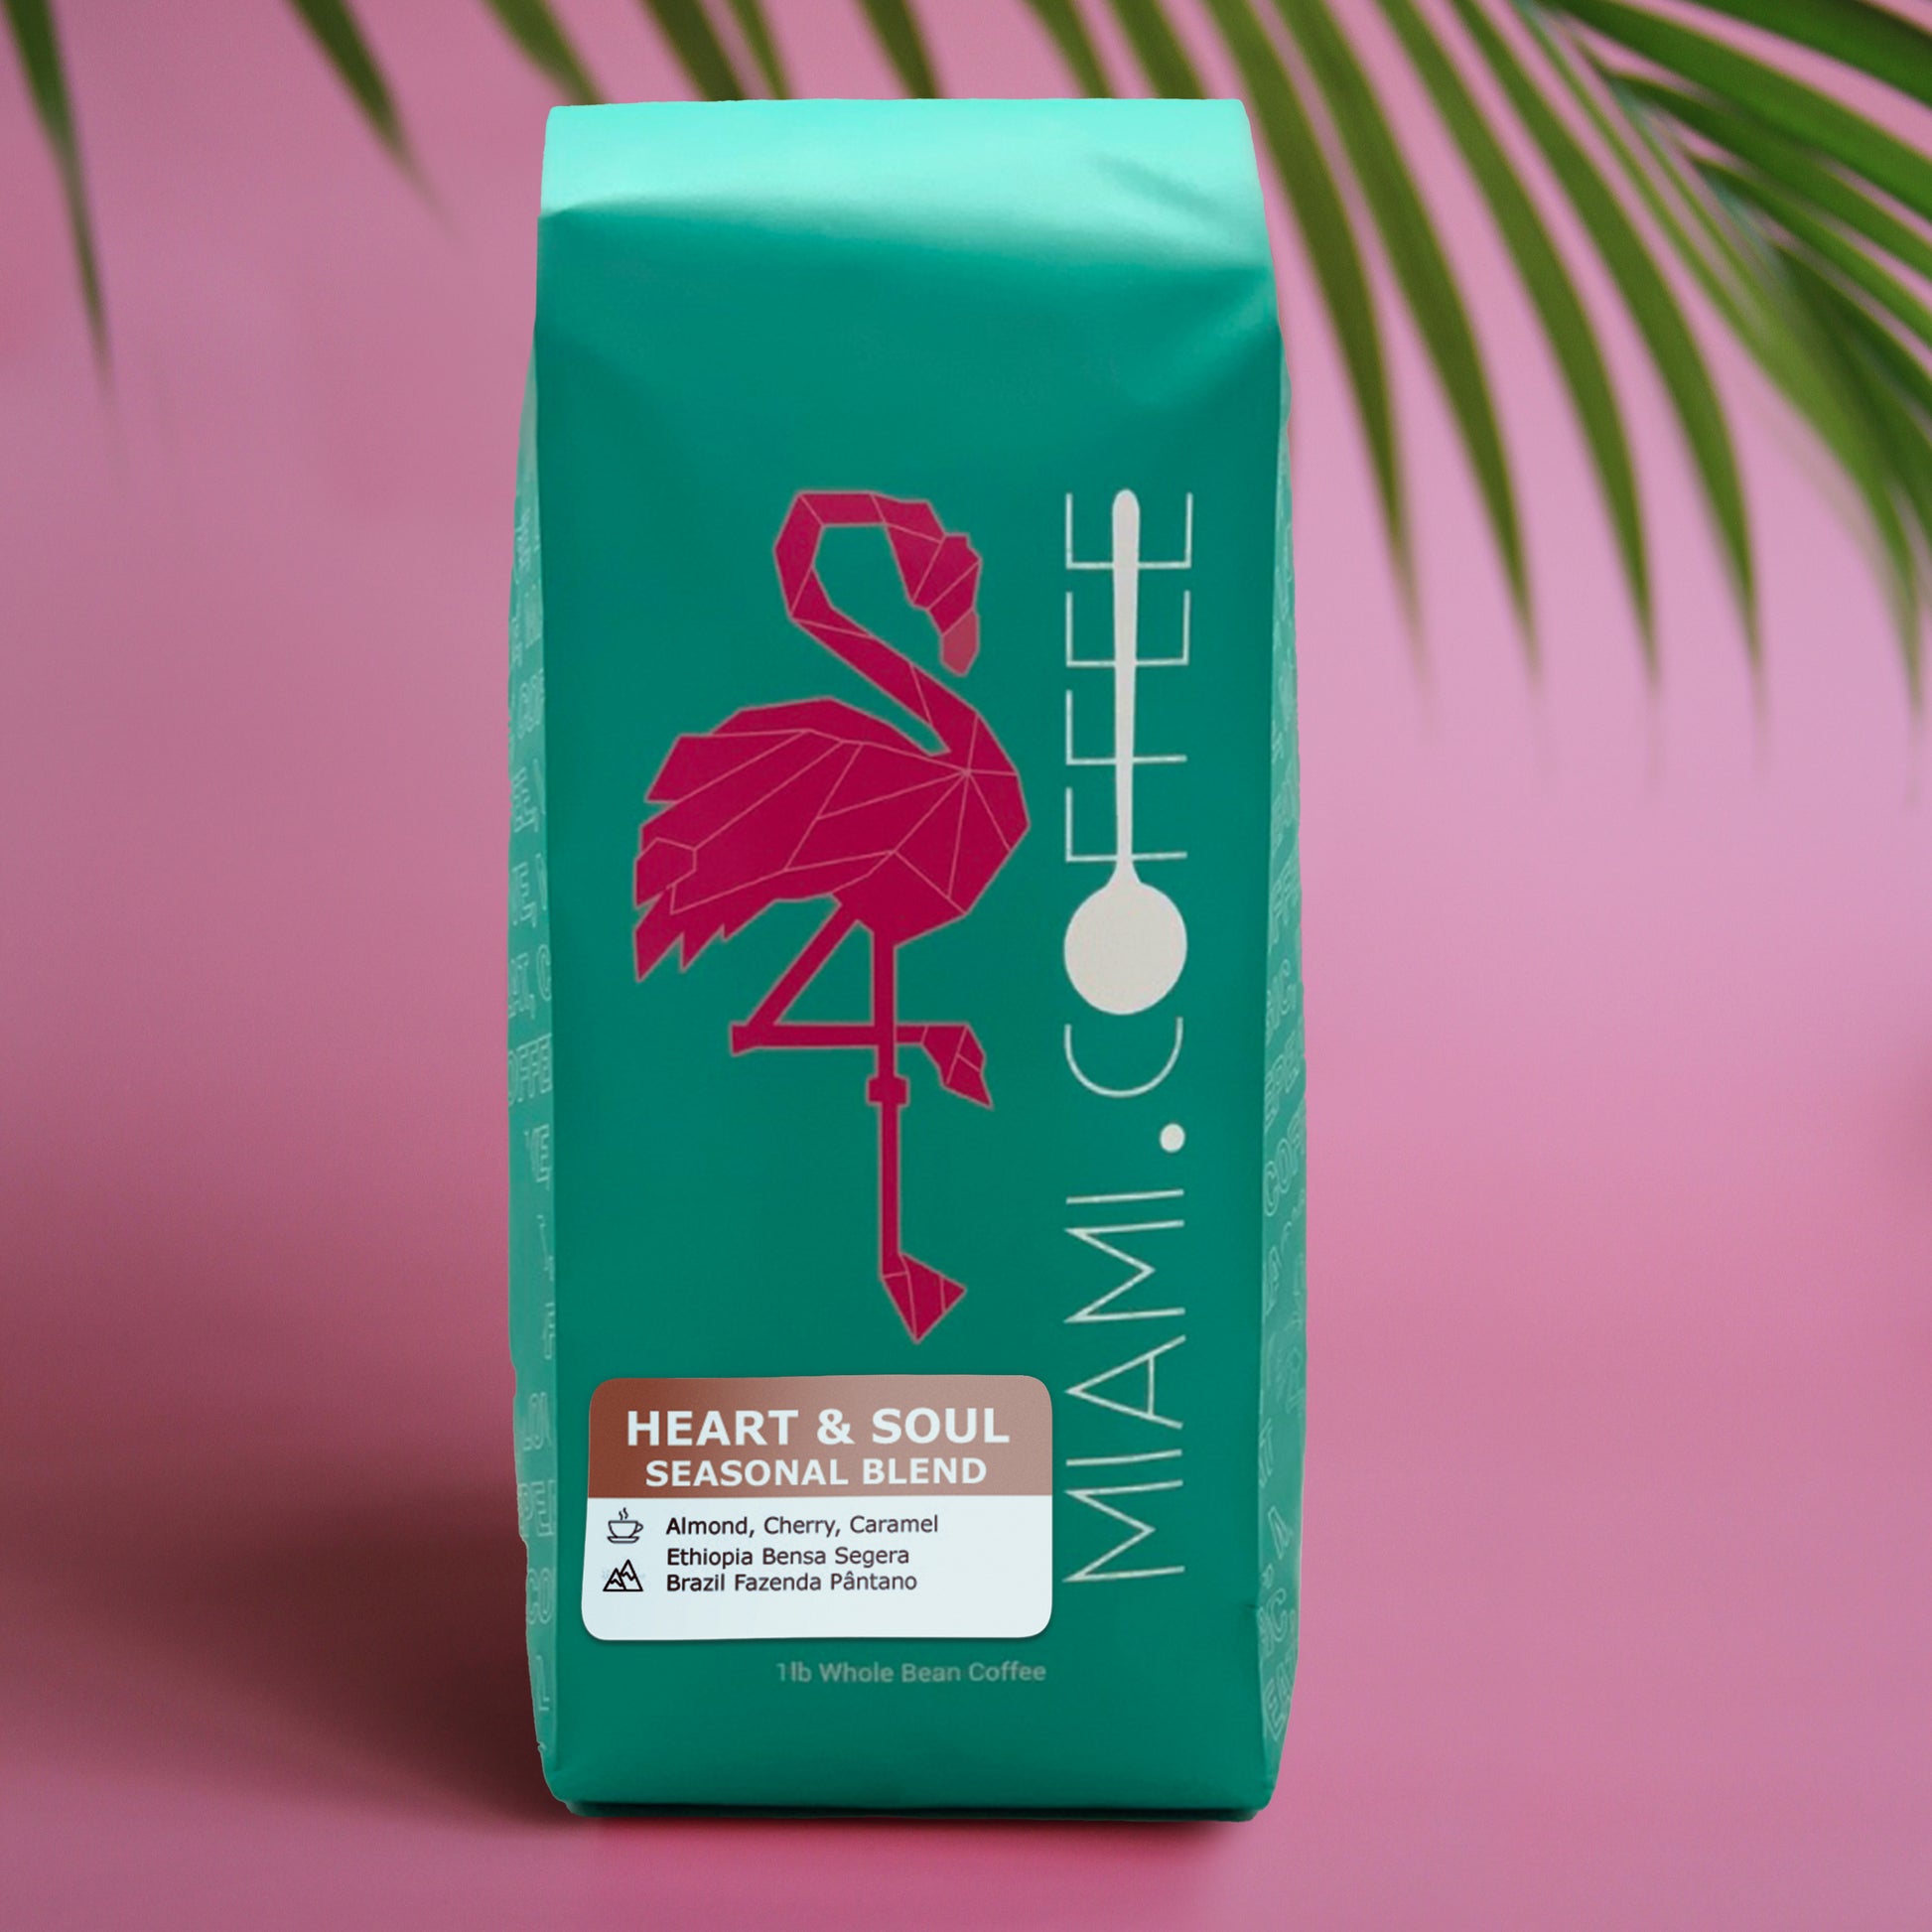 Miami (dot) Coffee Heart & Soul Seasonal Blend 16oz bag. Origins: Ethiopia Bensa Segera and Brazil Fazenda Pântano. Flavor Descriptors: Almond, Cherry, Caramel